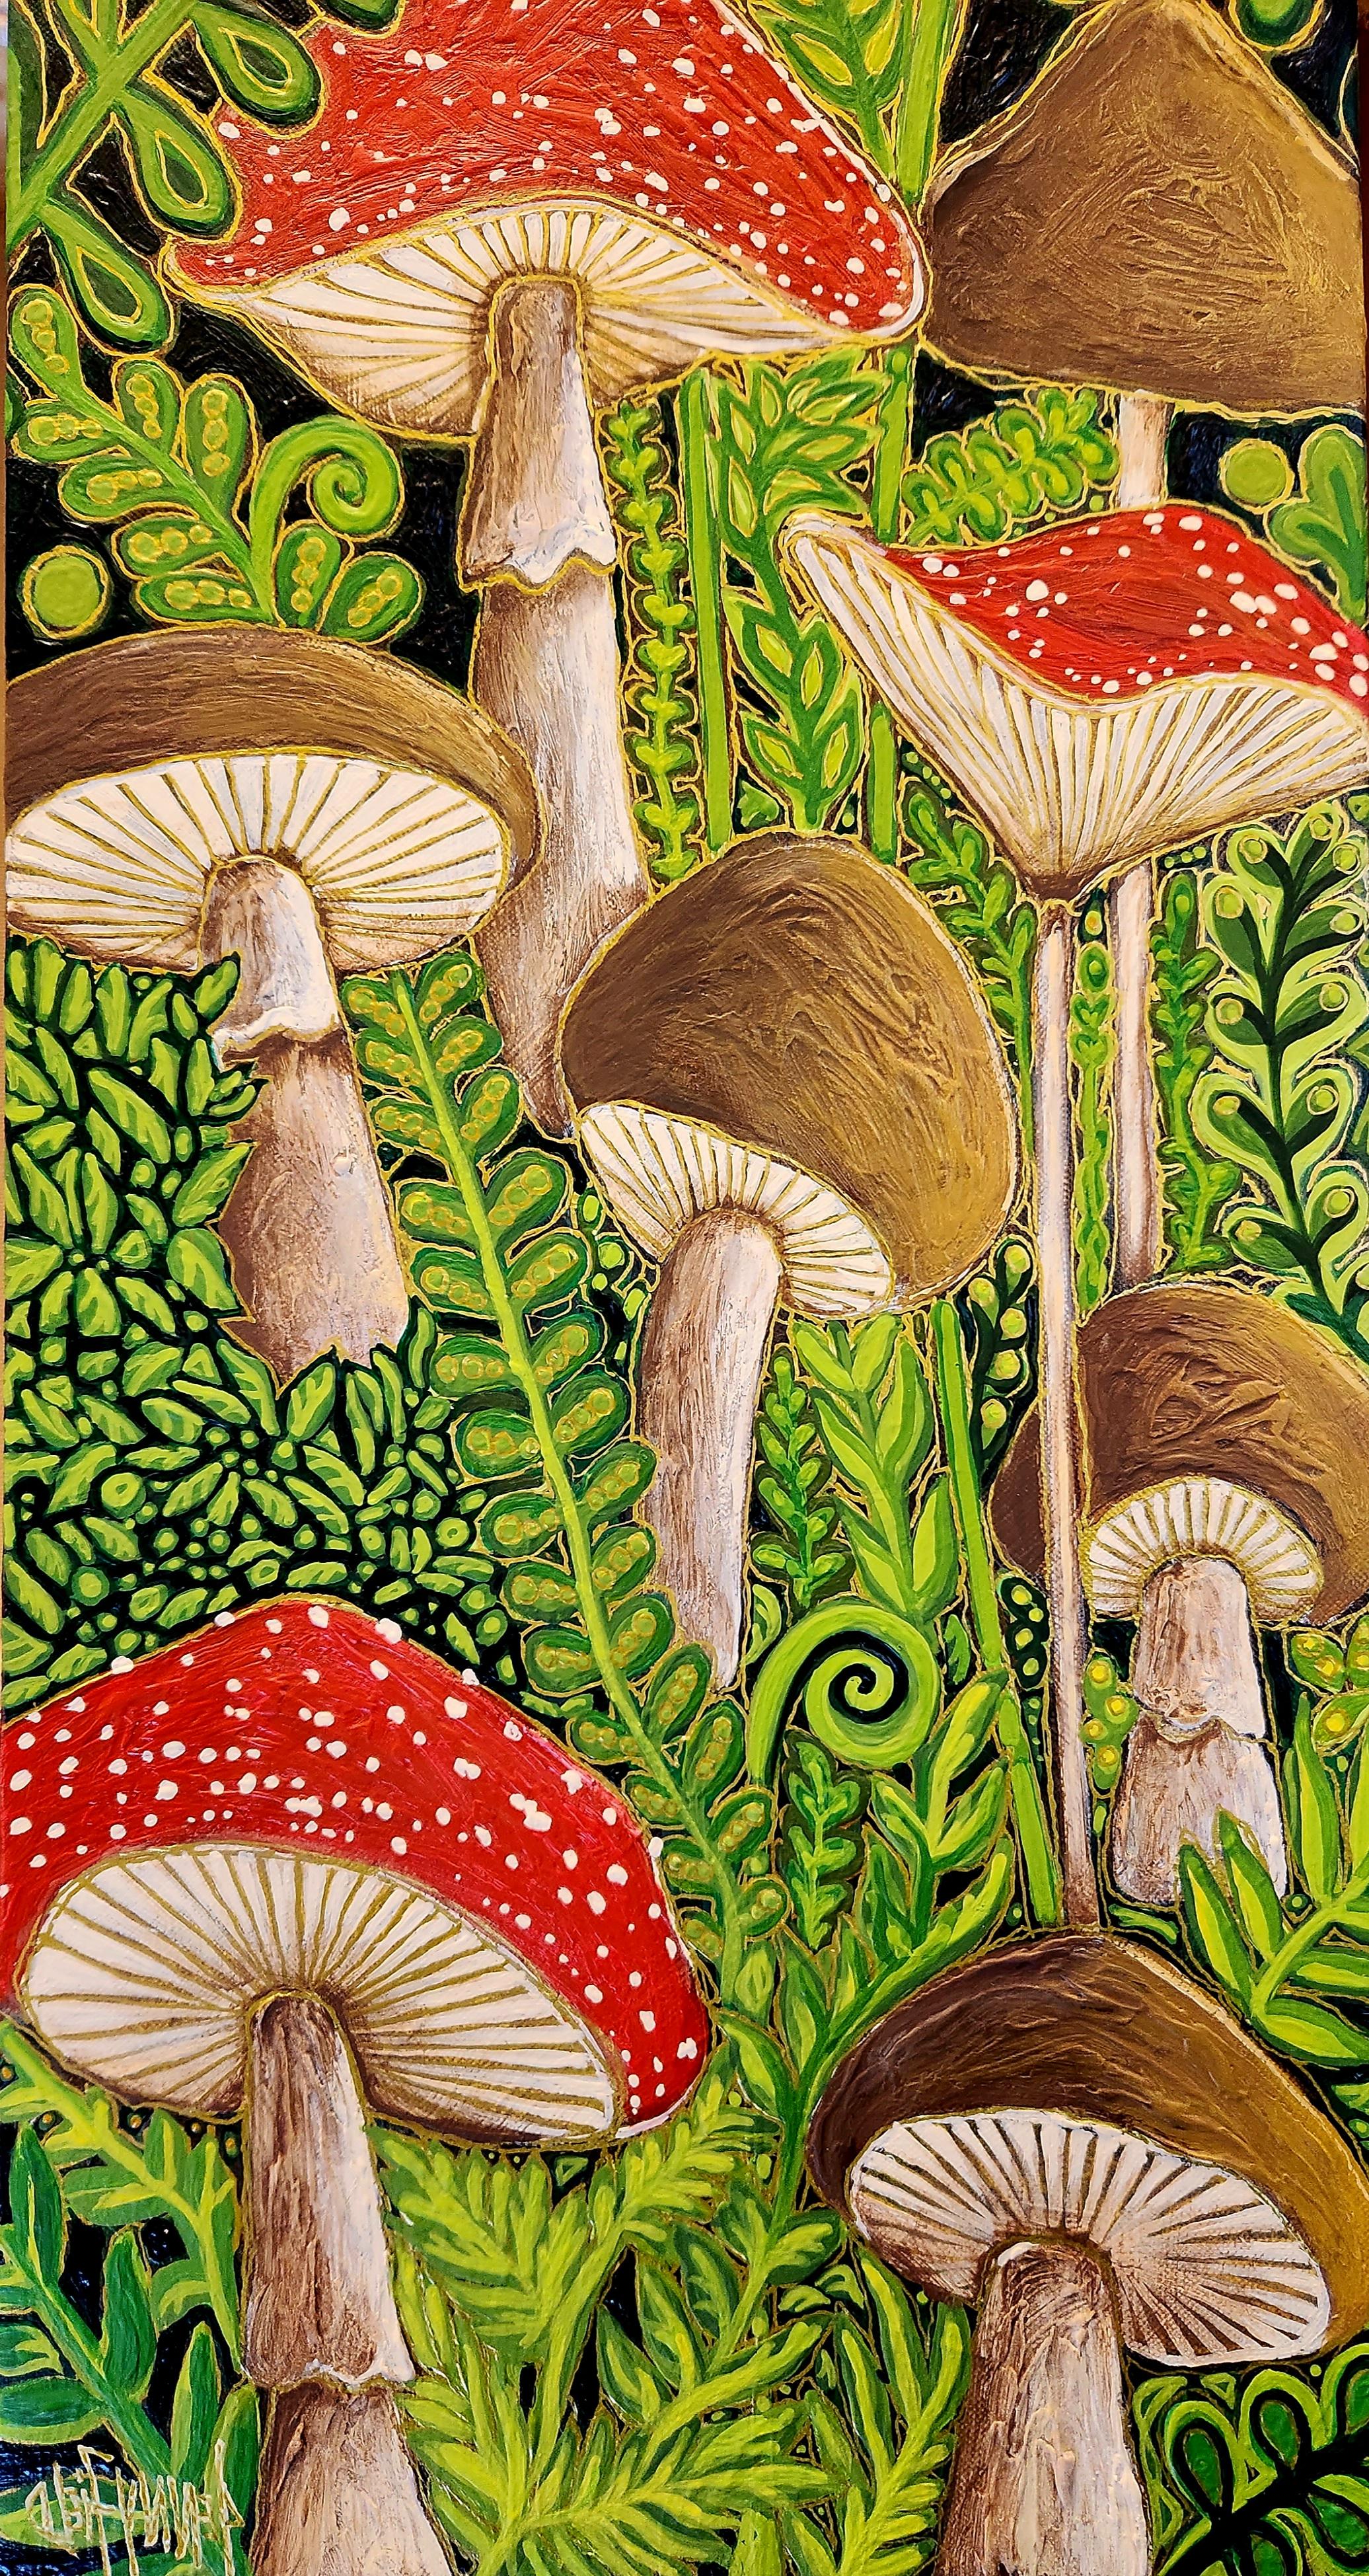 "Nature's Alchemy" exhibit painting of mushrooms